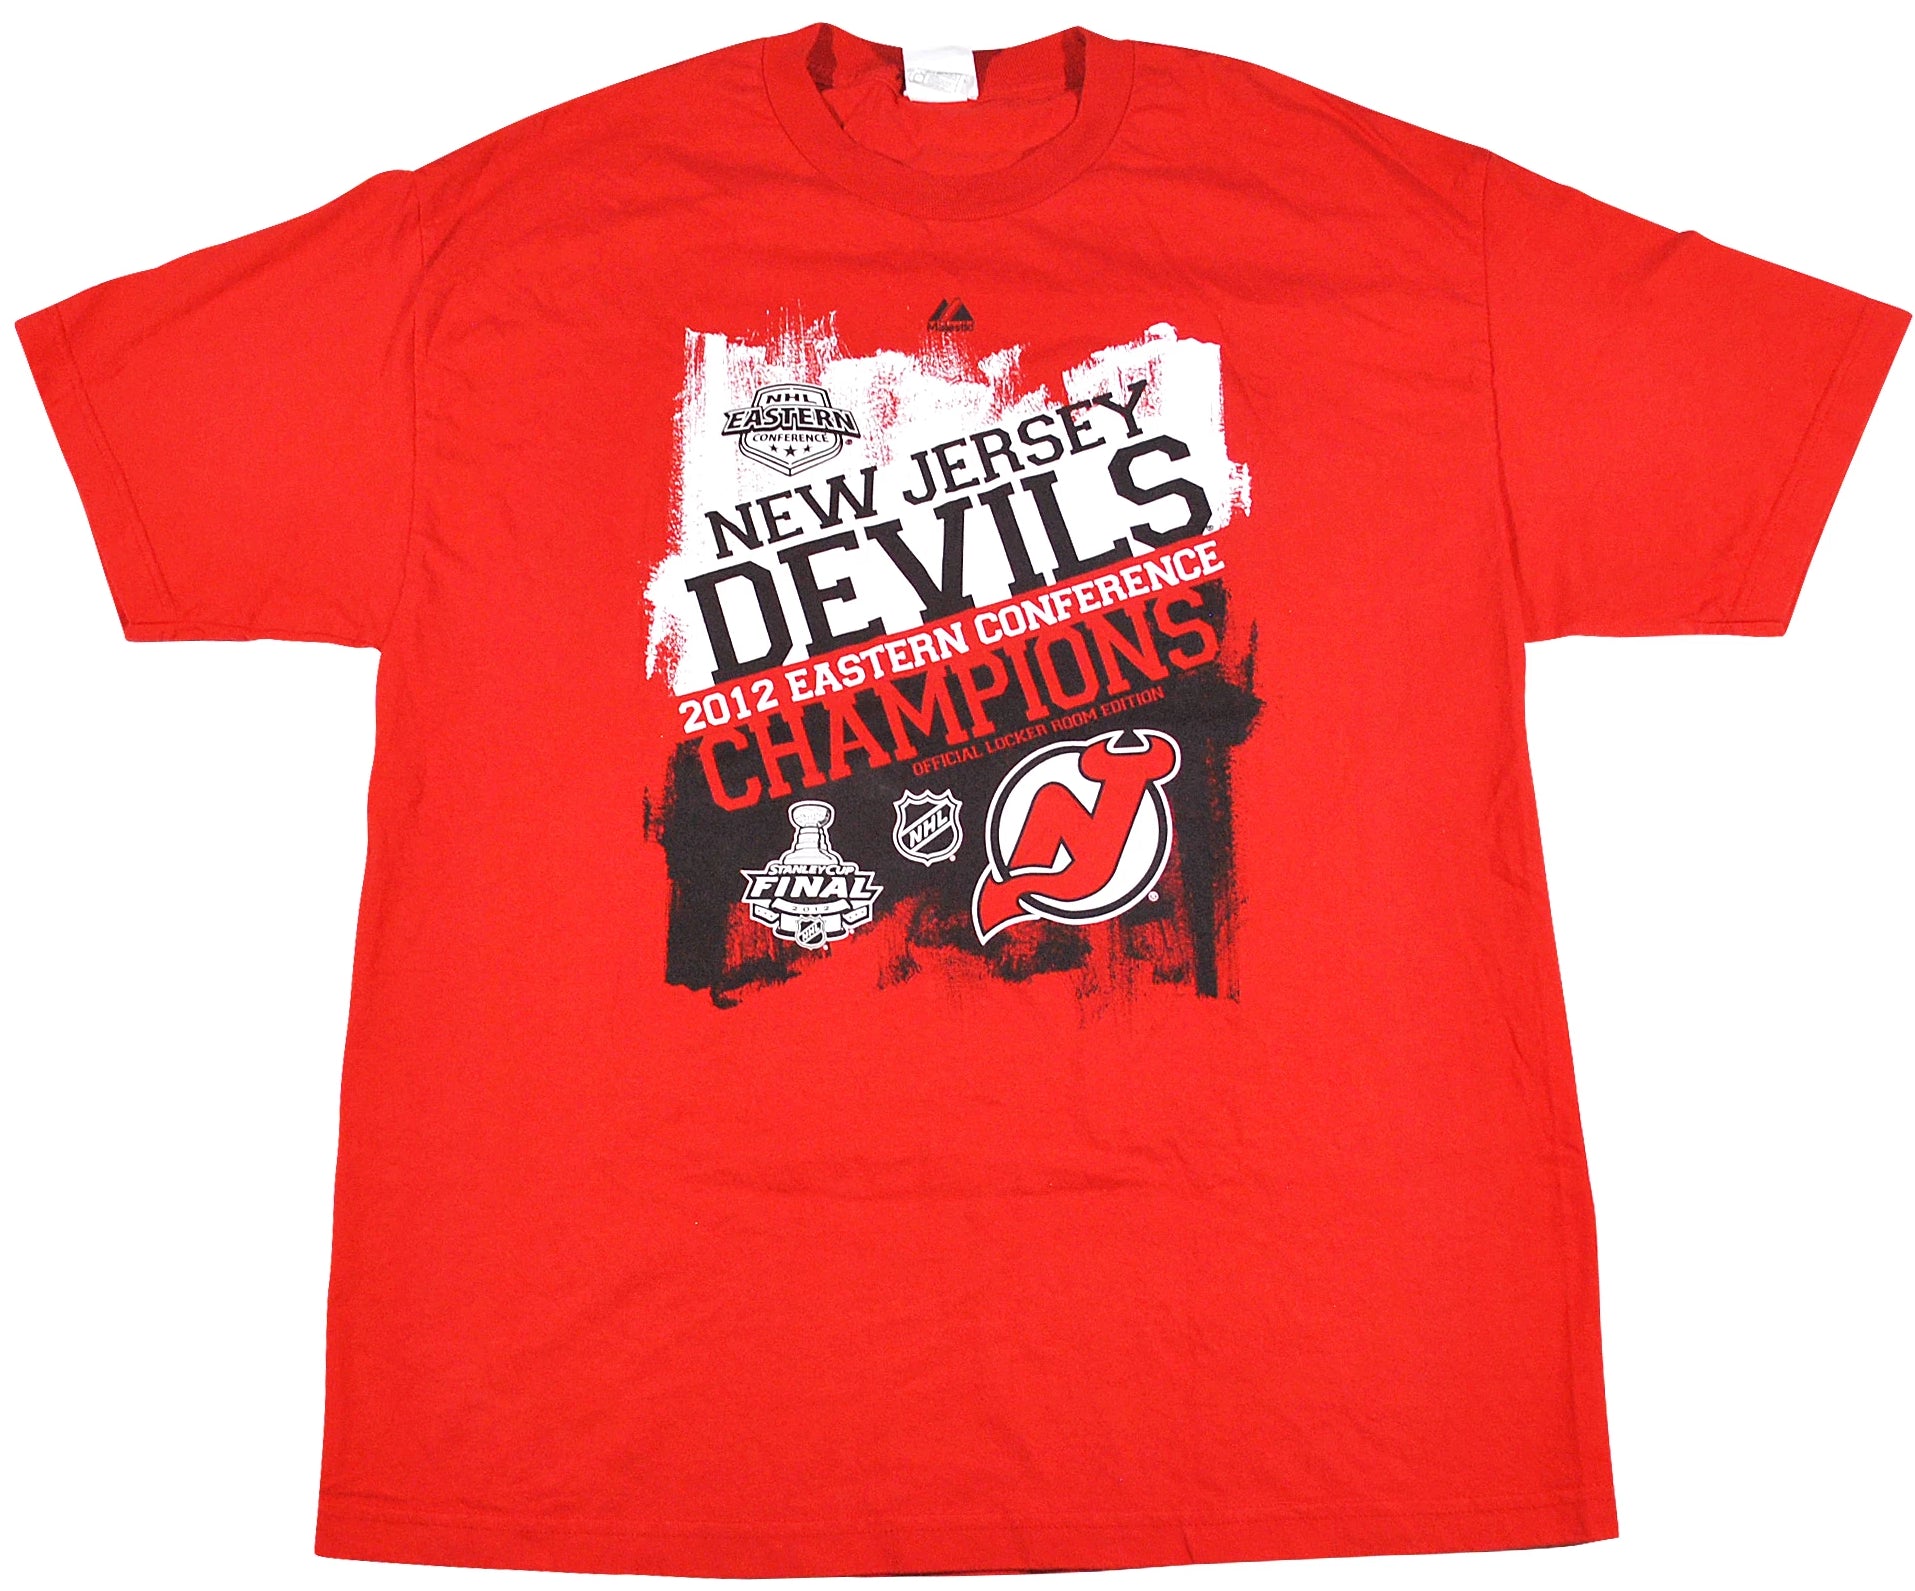 Cheap New Jersey Devils Apparel, Discount Devils Gear, NHL Devils